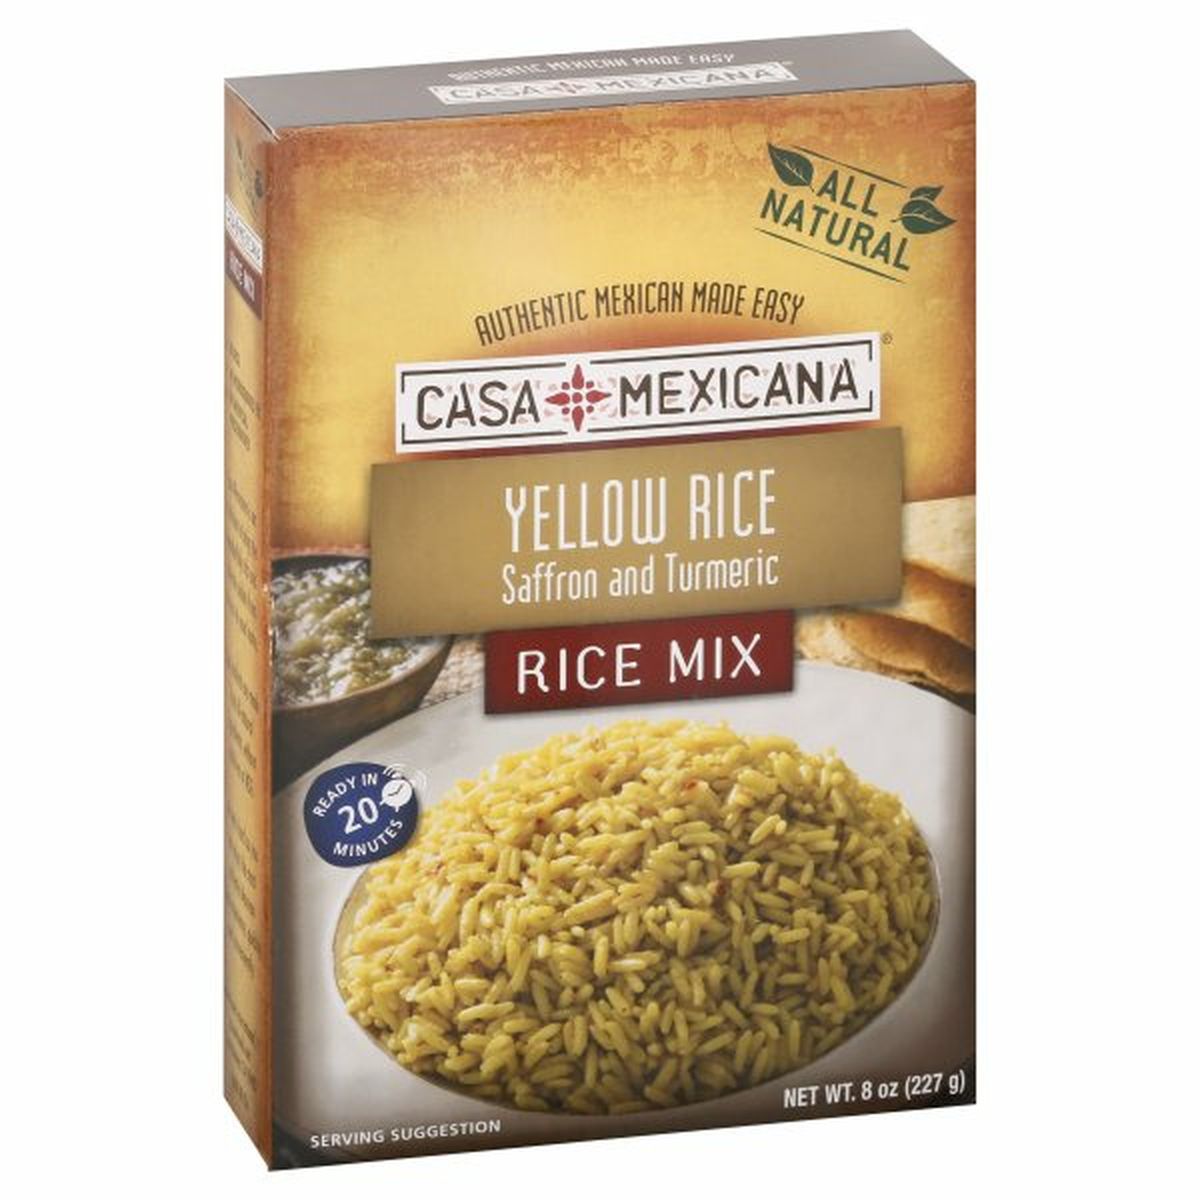 Calories in Casa Mexicana Rice Mix, Yellow Rice, Saffron and Turmeric